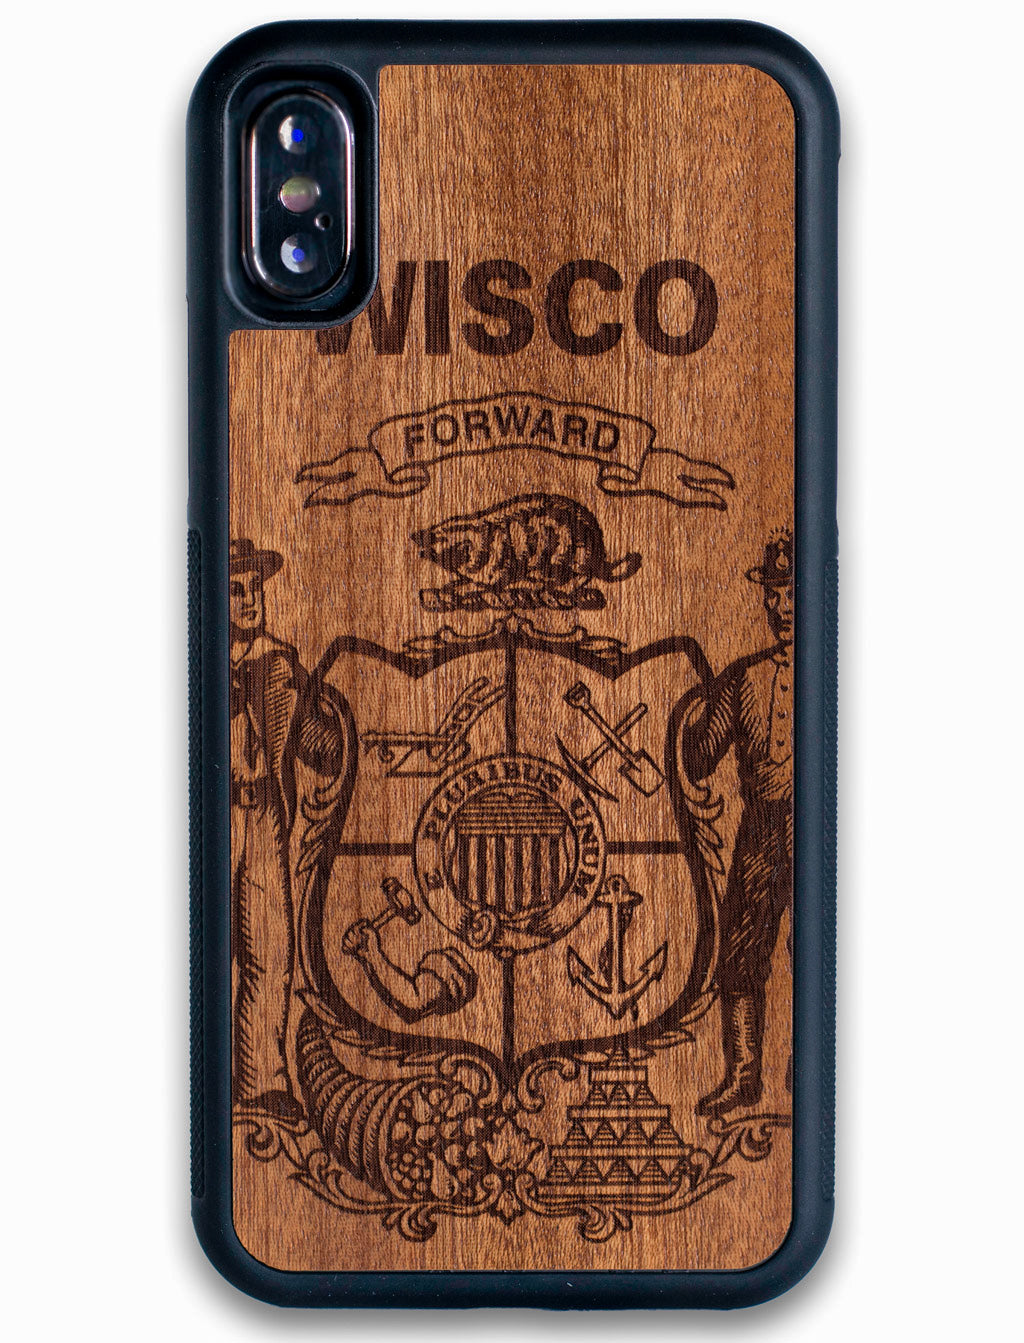 Wisconsin flag wooden iPhone X case